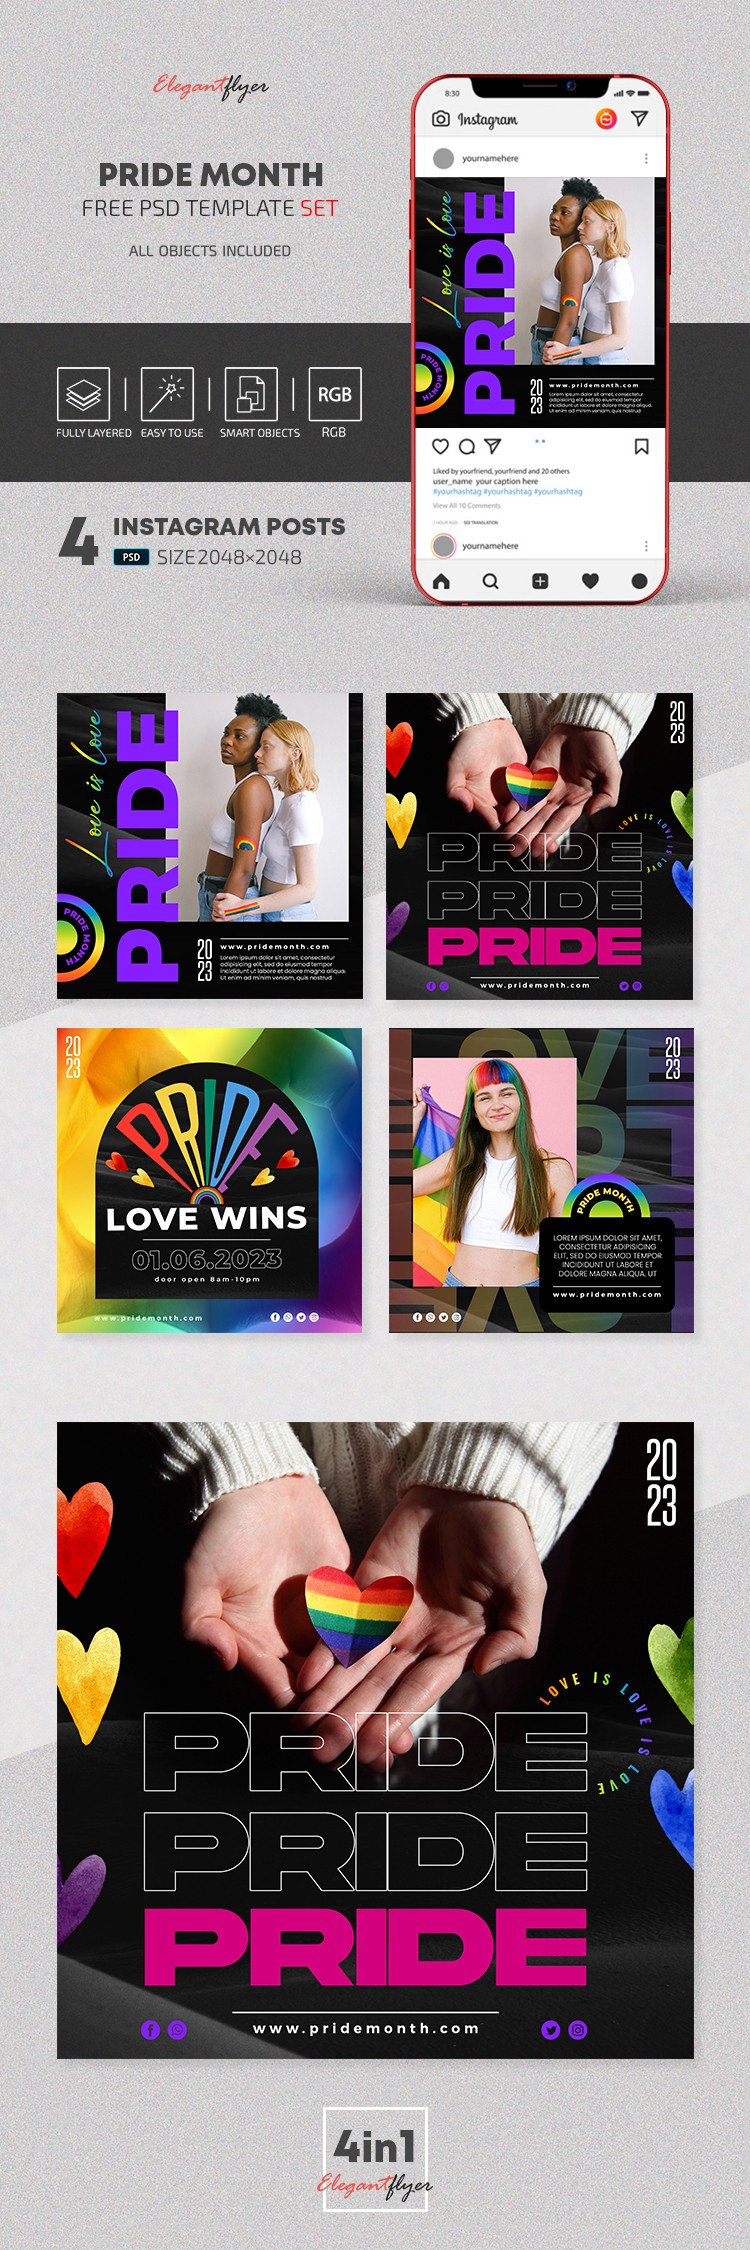 Post Instagram per Pride Month by ElegantFlyer